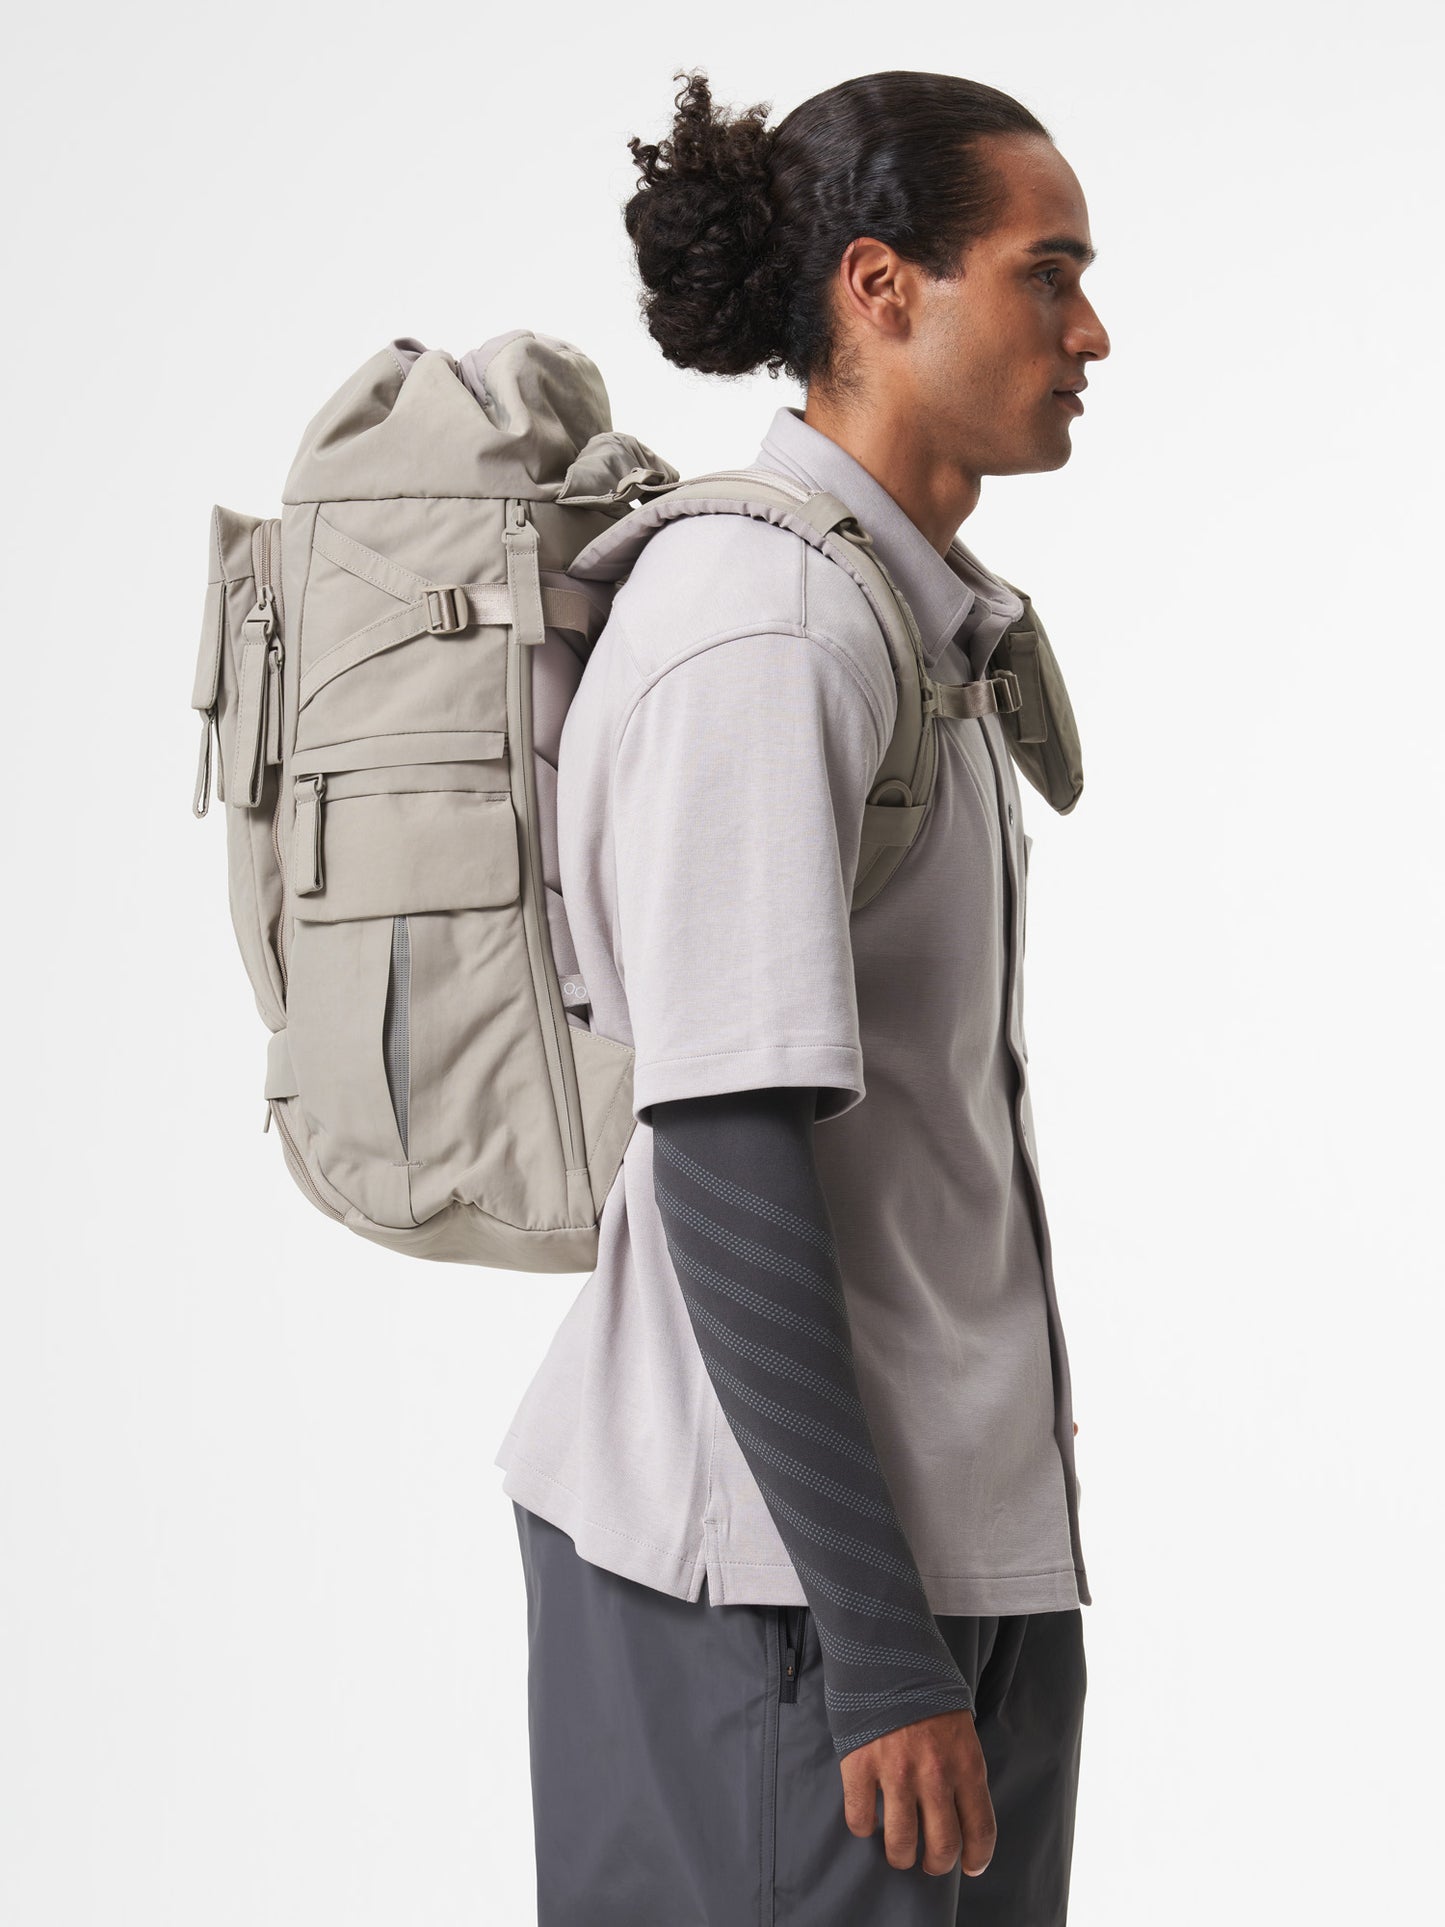 pinqponq-backpack-Blok-Large-Crinkle-Taupe-model-side